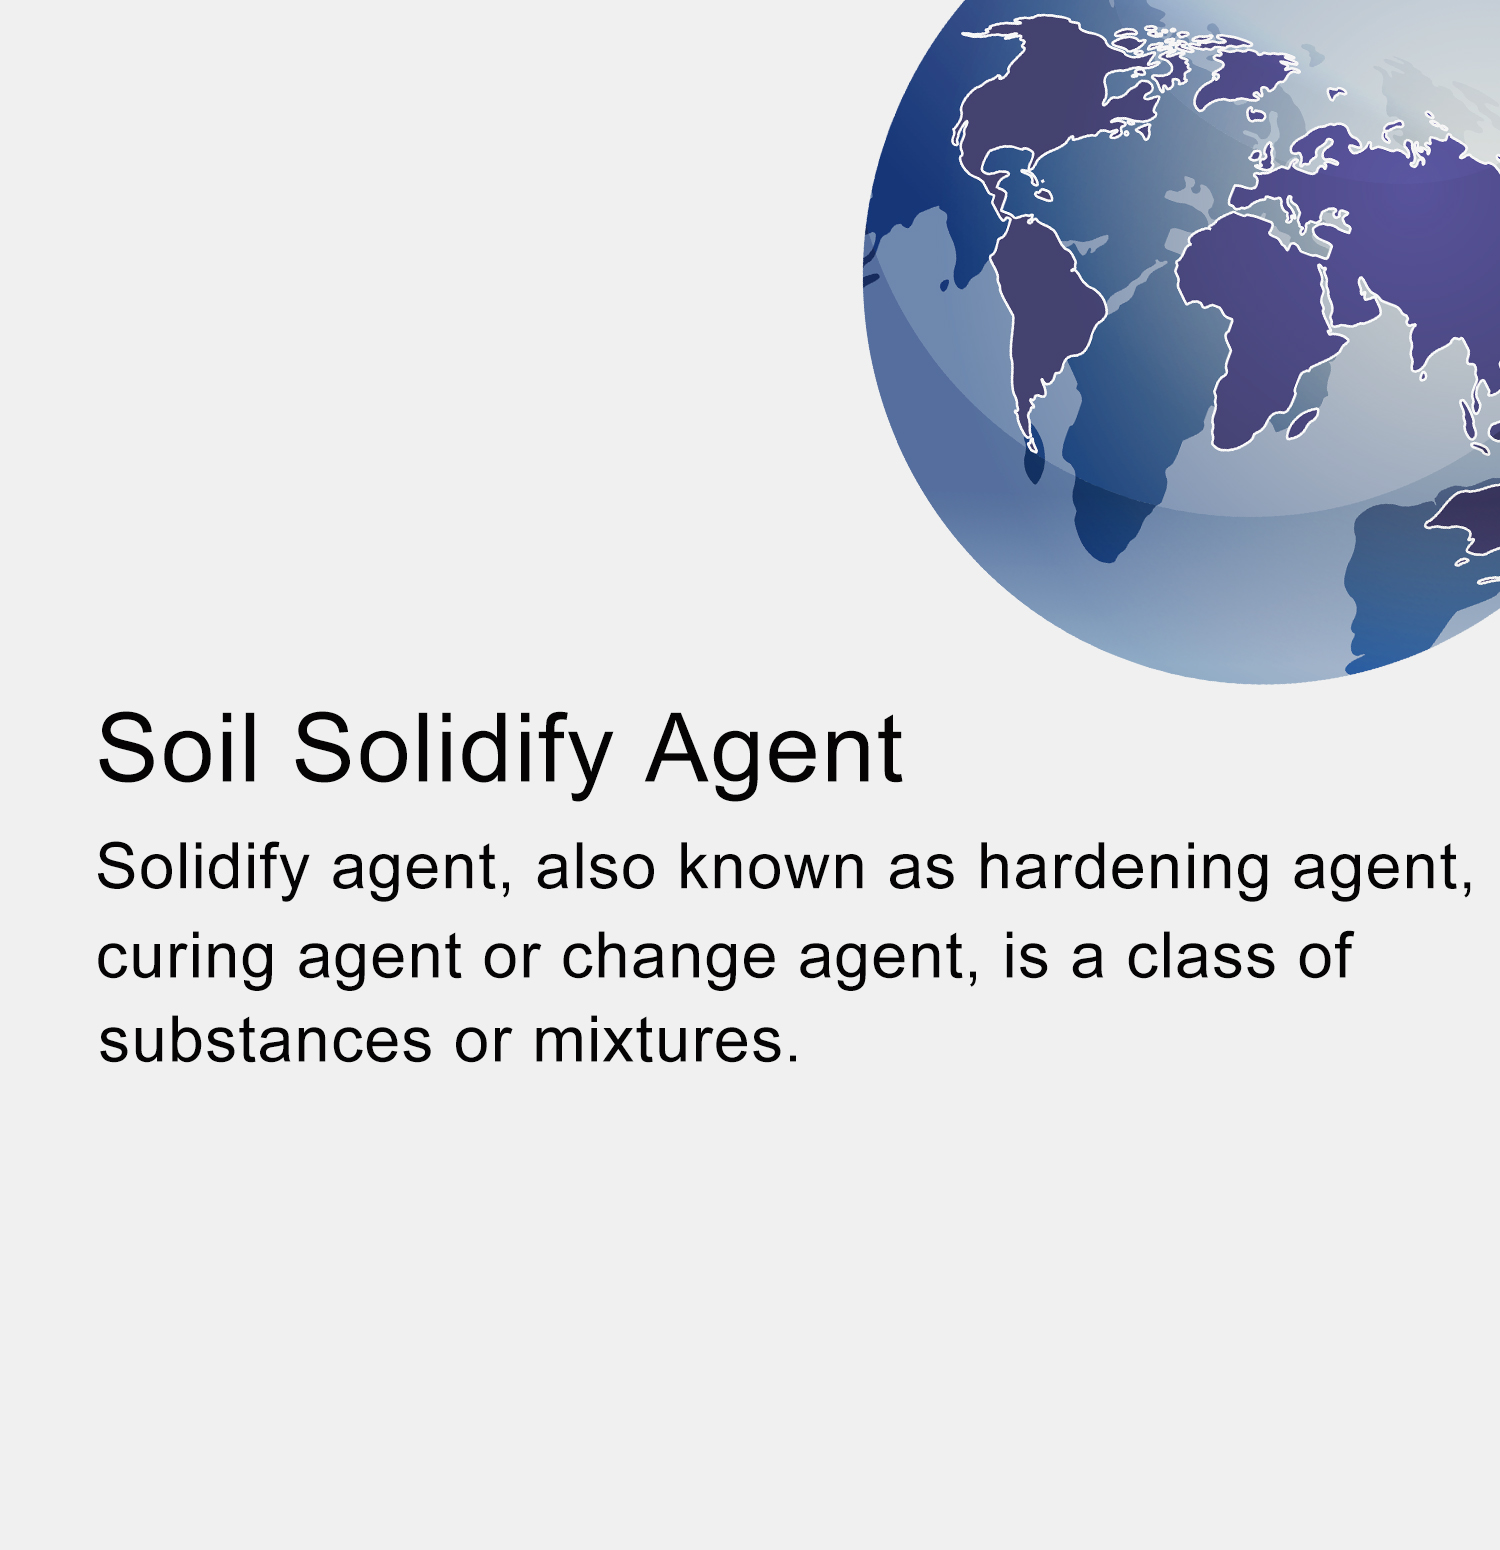 Soil Soilidify Agent (Mineralizer)